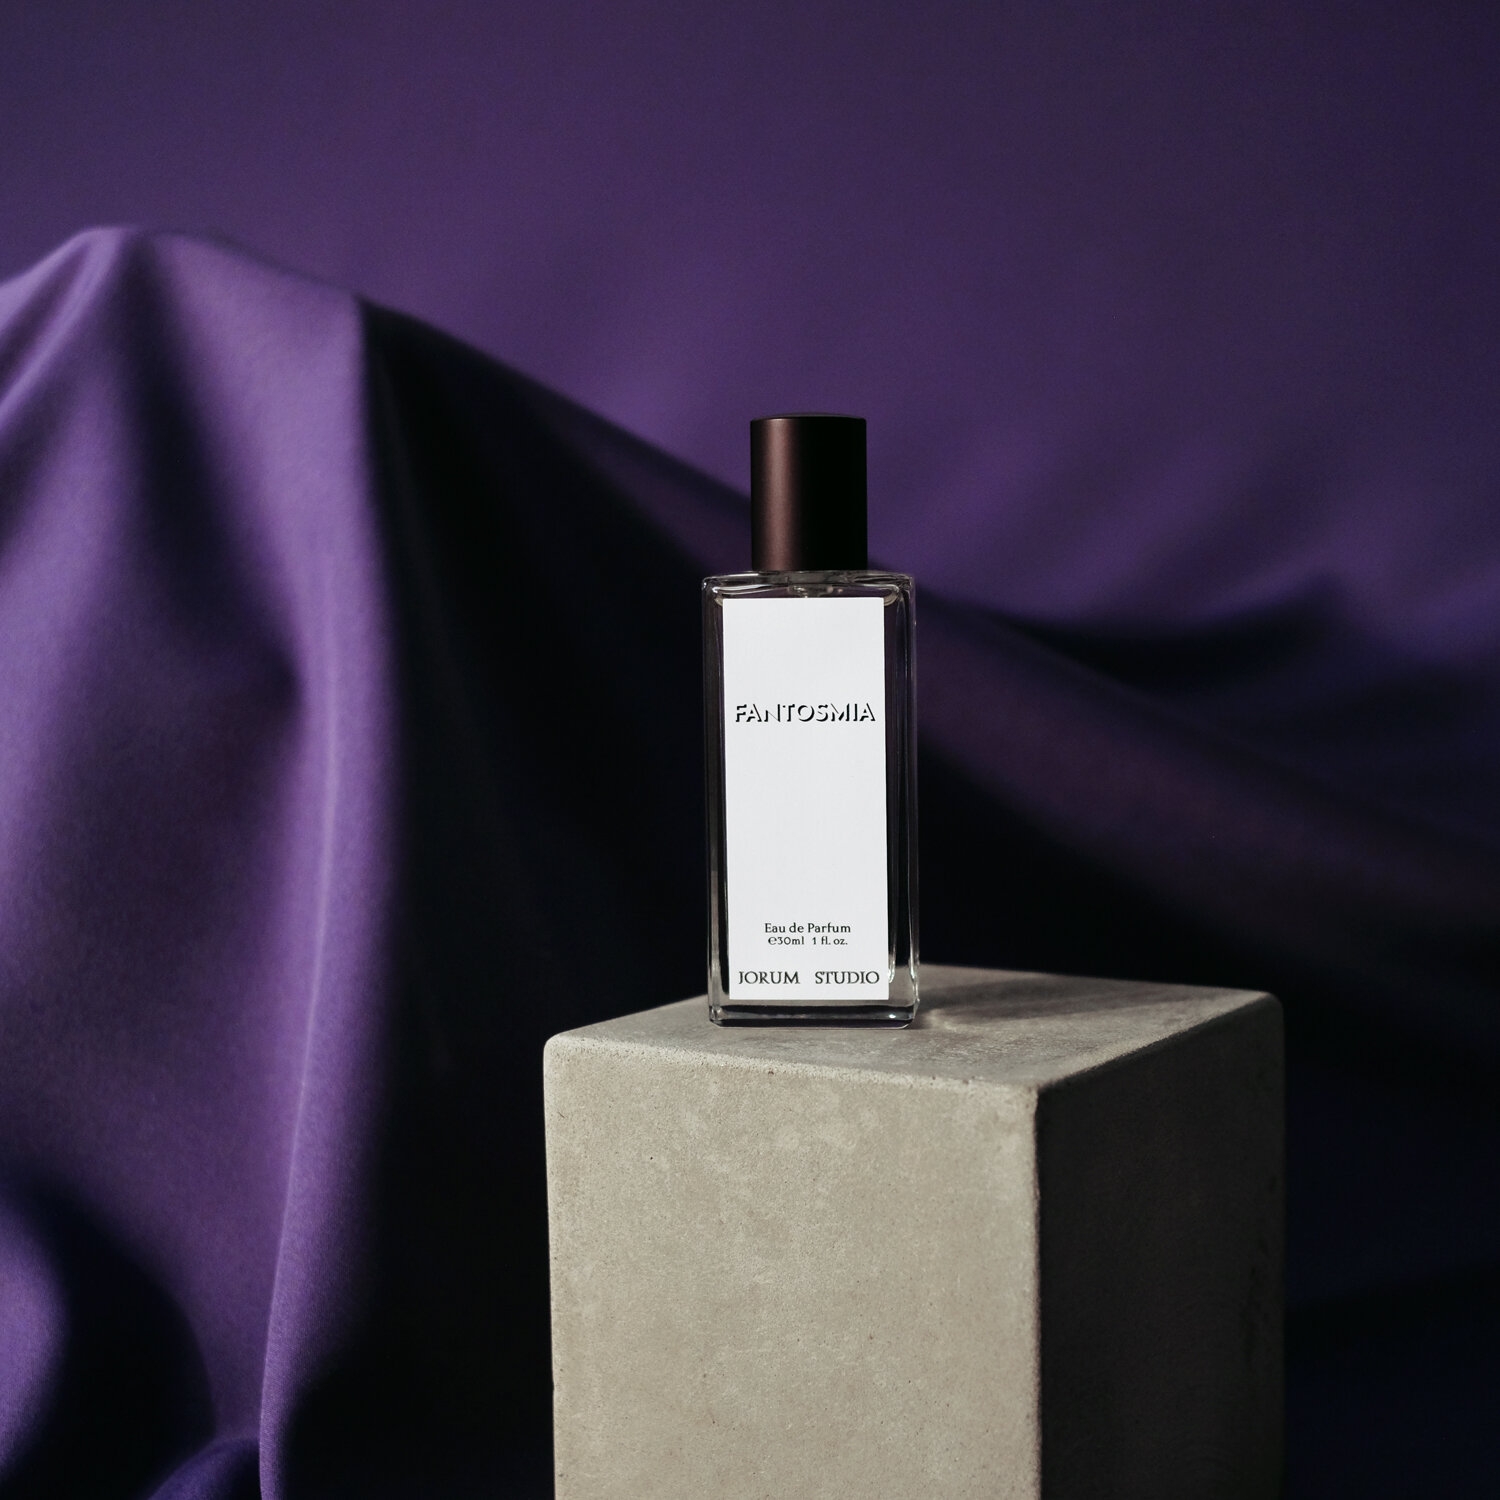 Jorum Studio - Fantosmia | Perfume Lounge